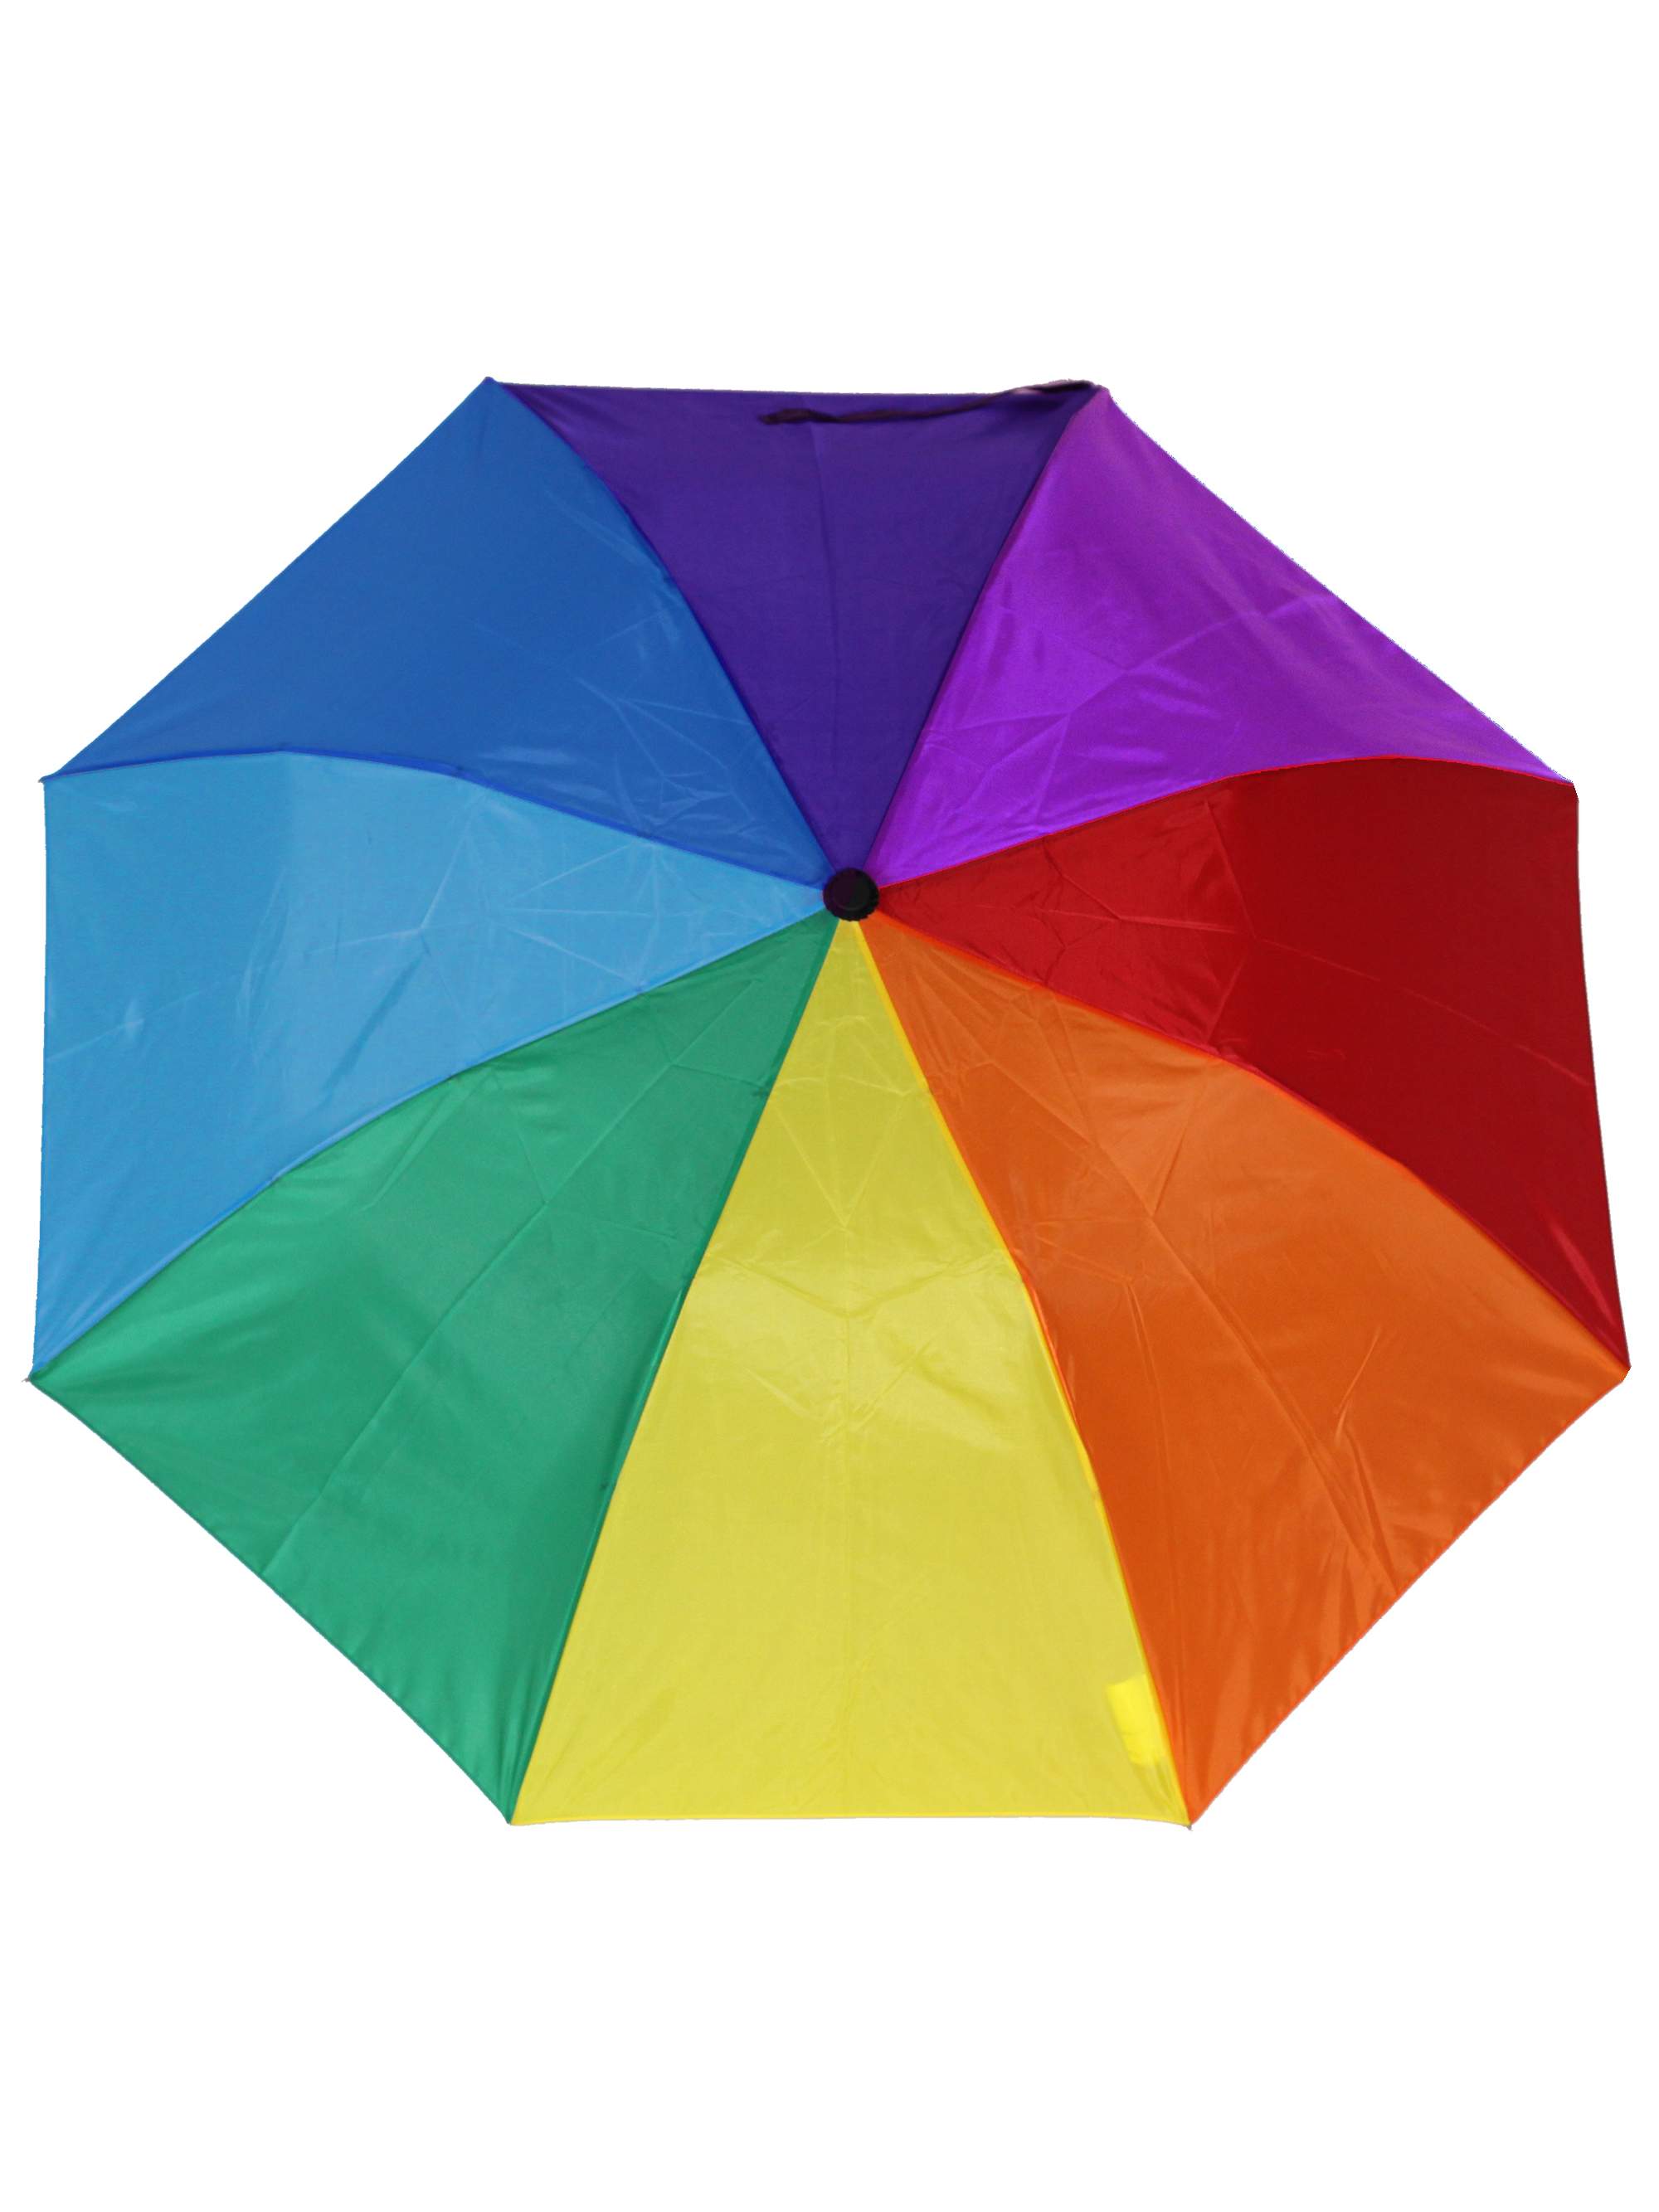 Misty Harbor Automatic Open Folding Rain Umbrella Rainbow - image 1 of 4